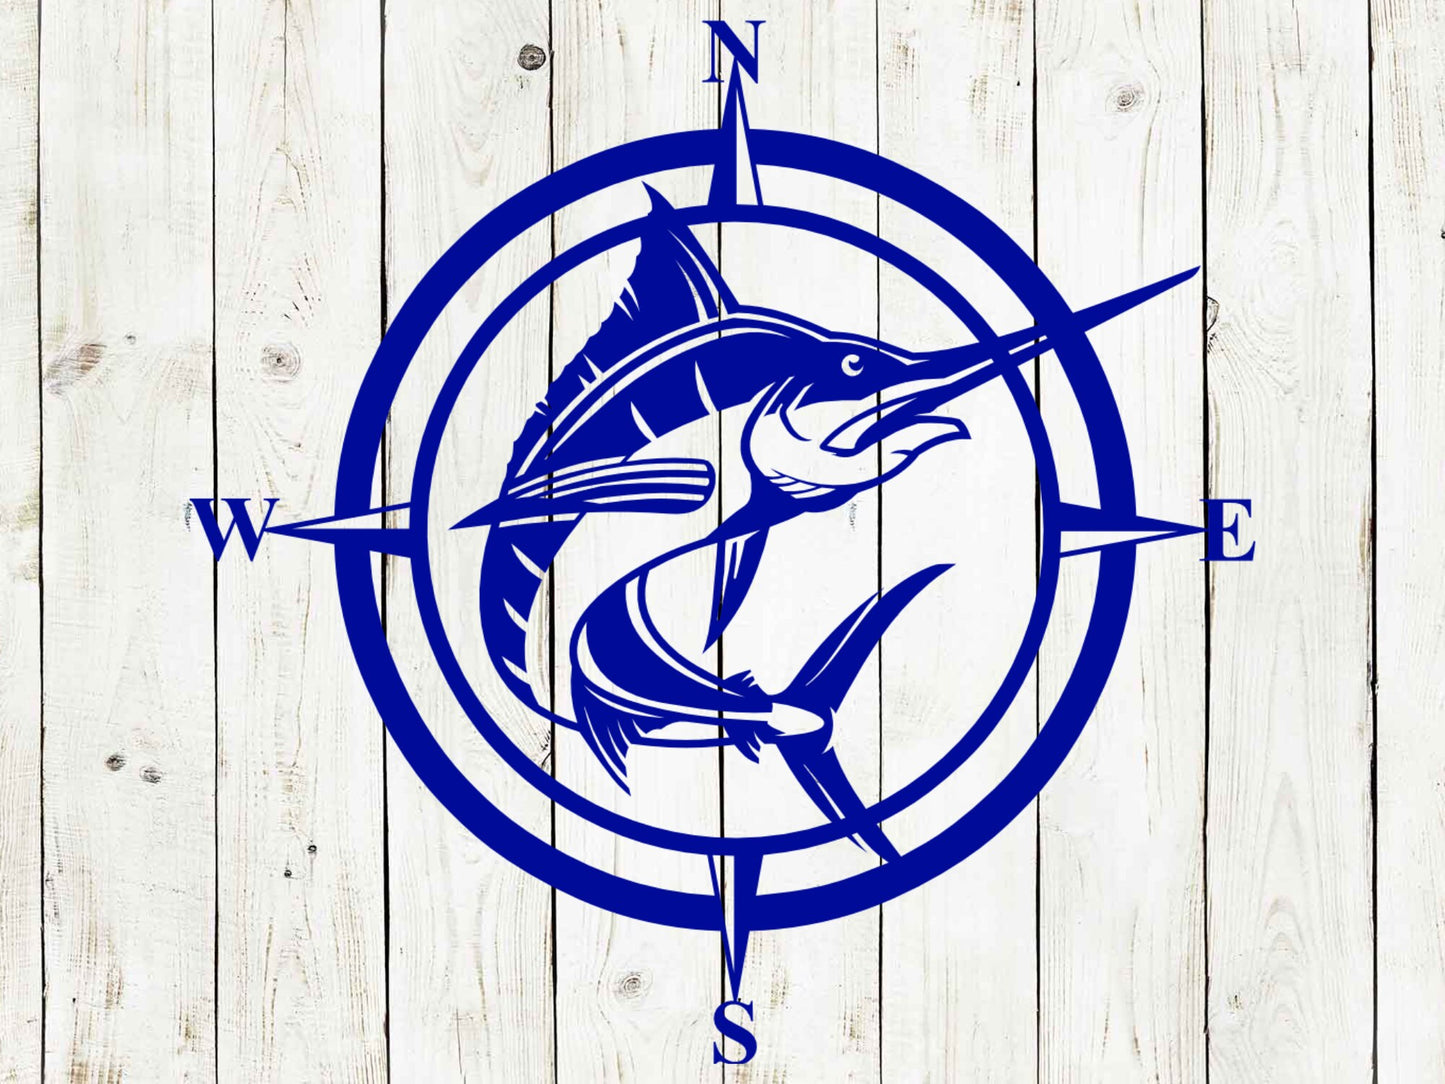 Marlin with Compass Decorative Metal Sign, Metal Art, Metal Sign,, Summer, Spring, Beach Sign, Beach House, Deep Sea, Marlin